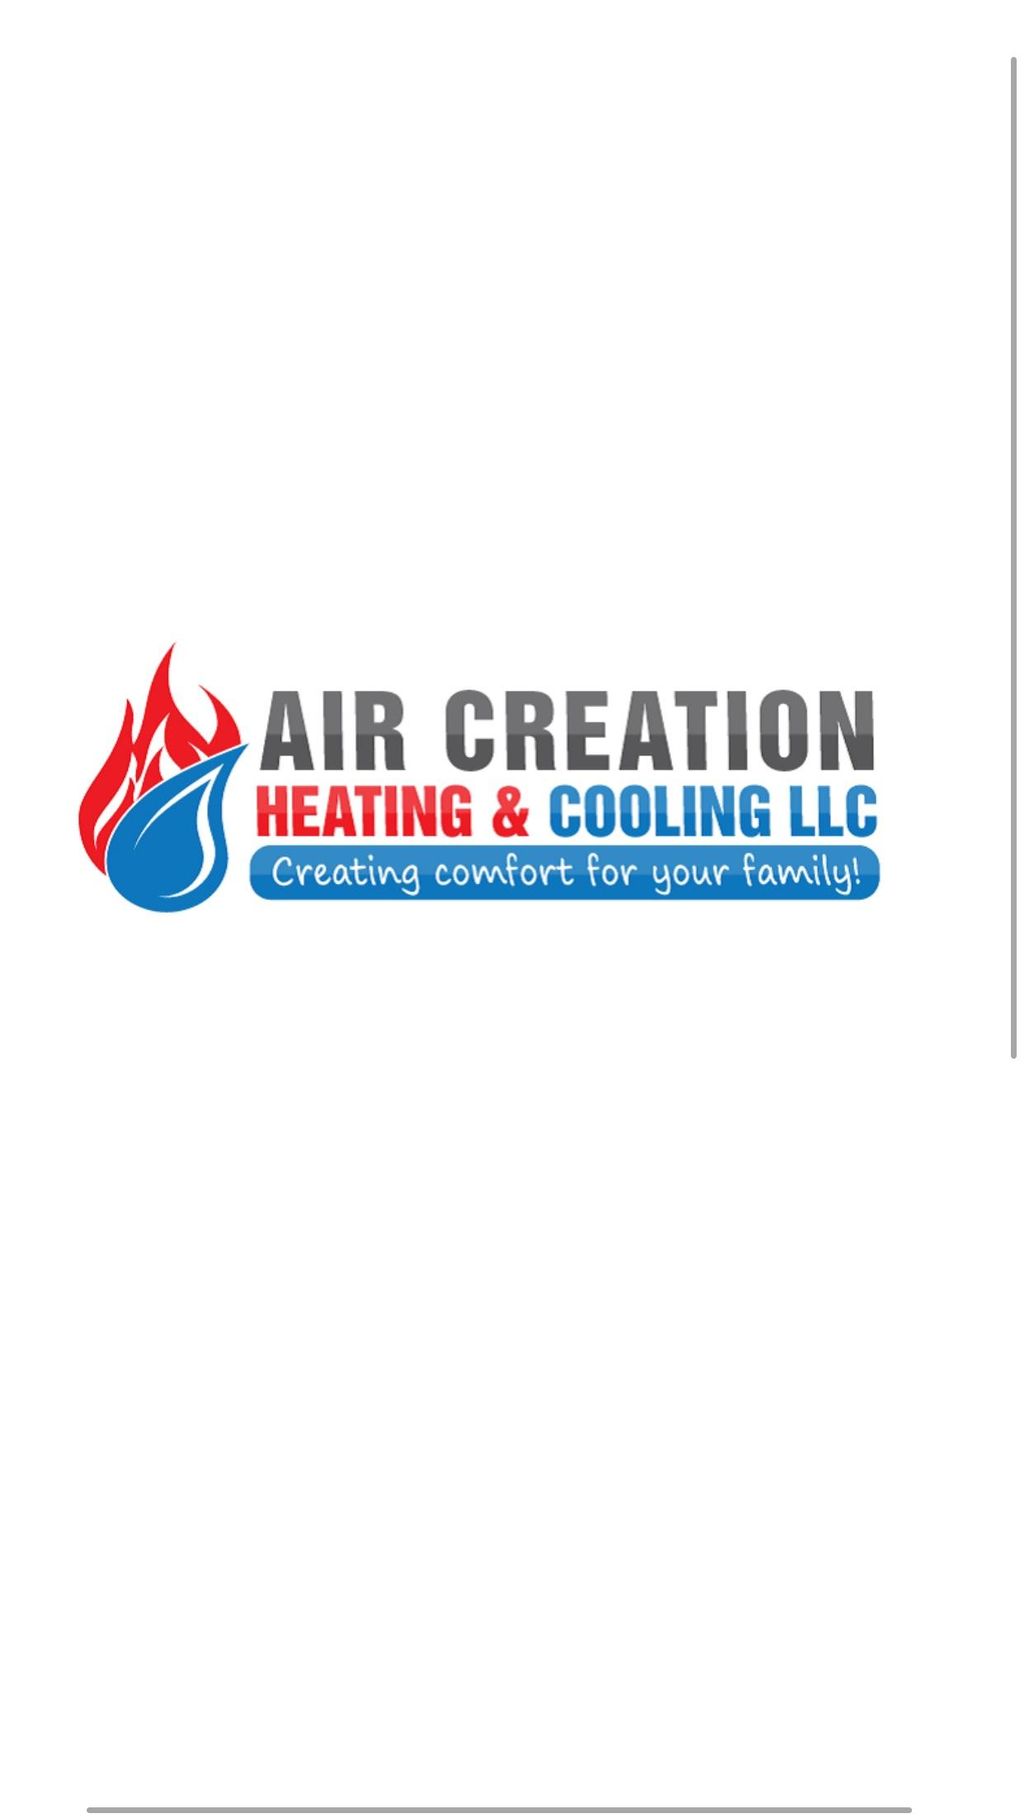 Air Creation Heating & Cooling LLC